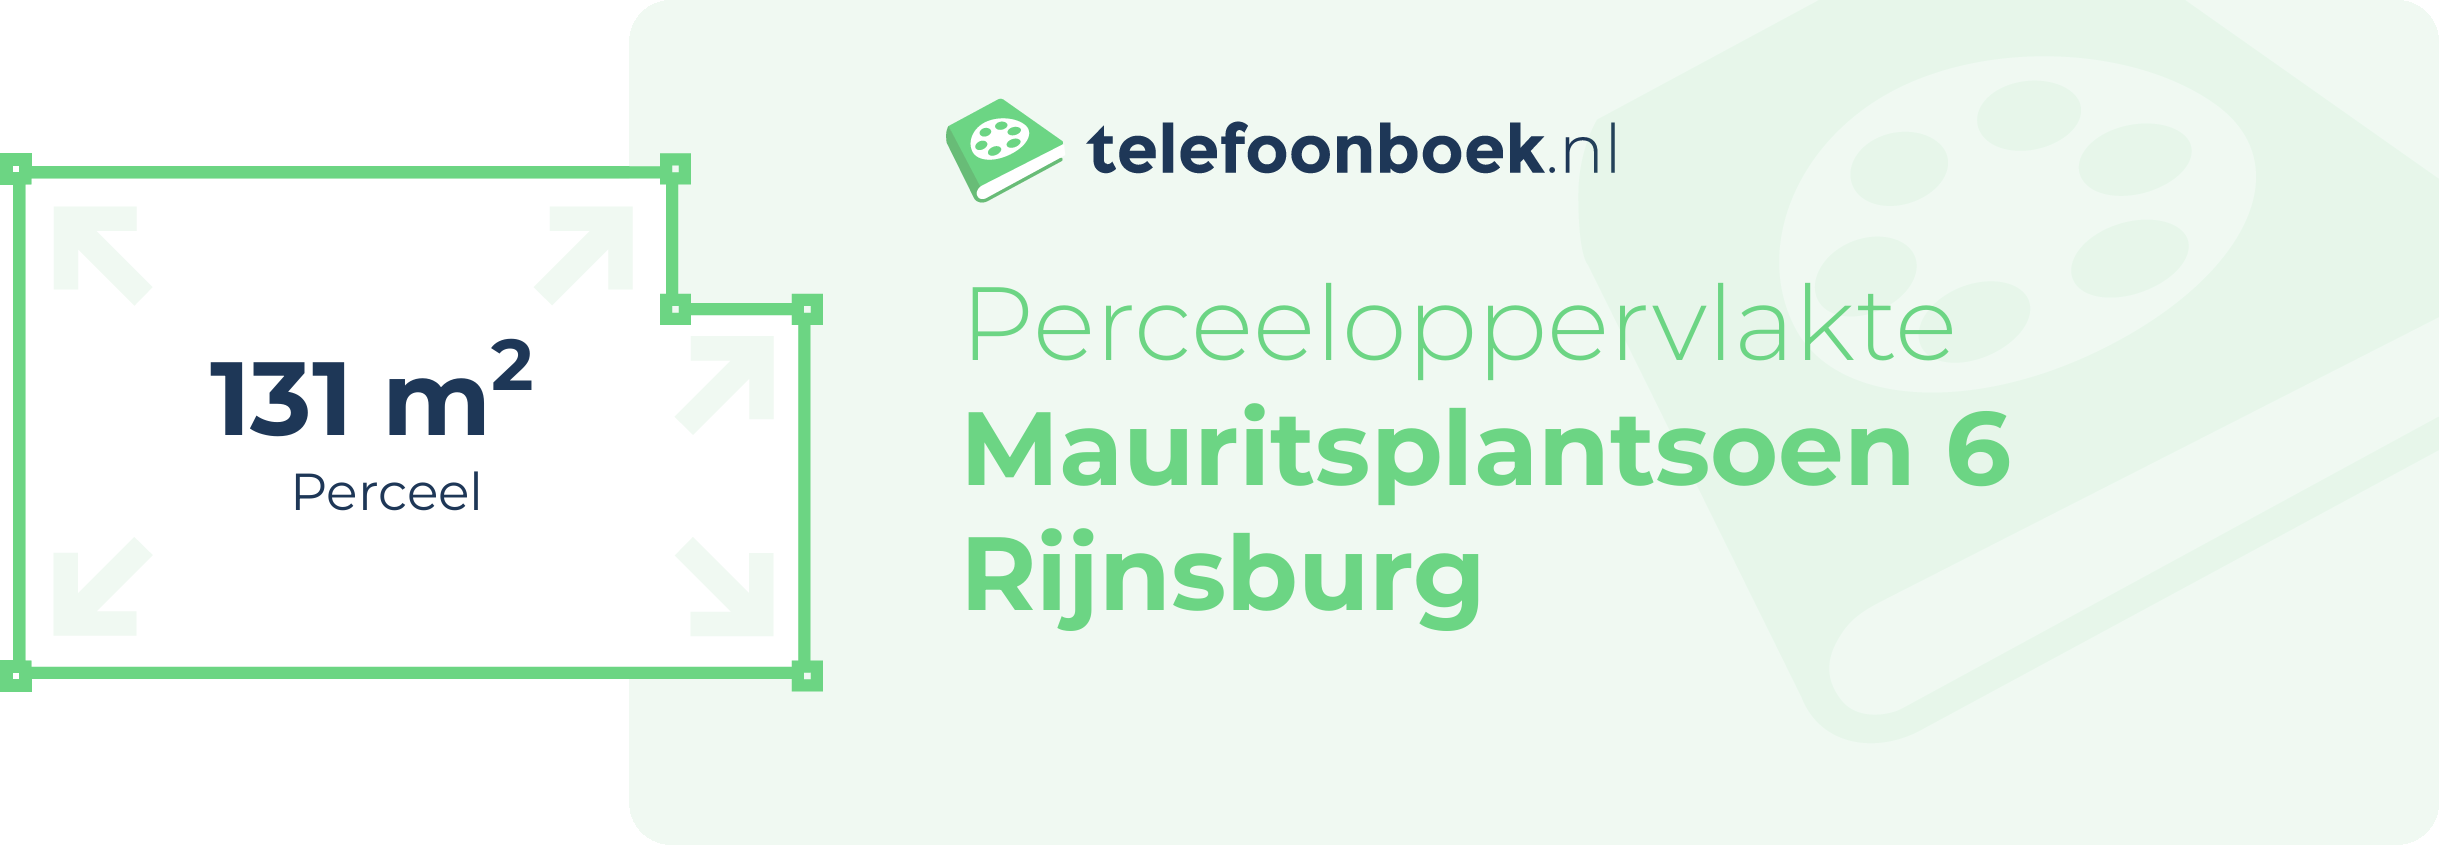 Perceeloppervlakte Mauritsplantsoen 6 Rijnsburg